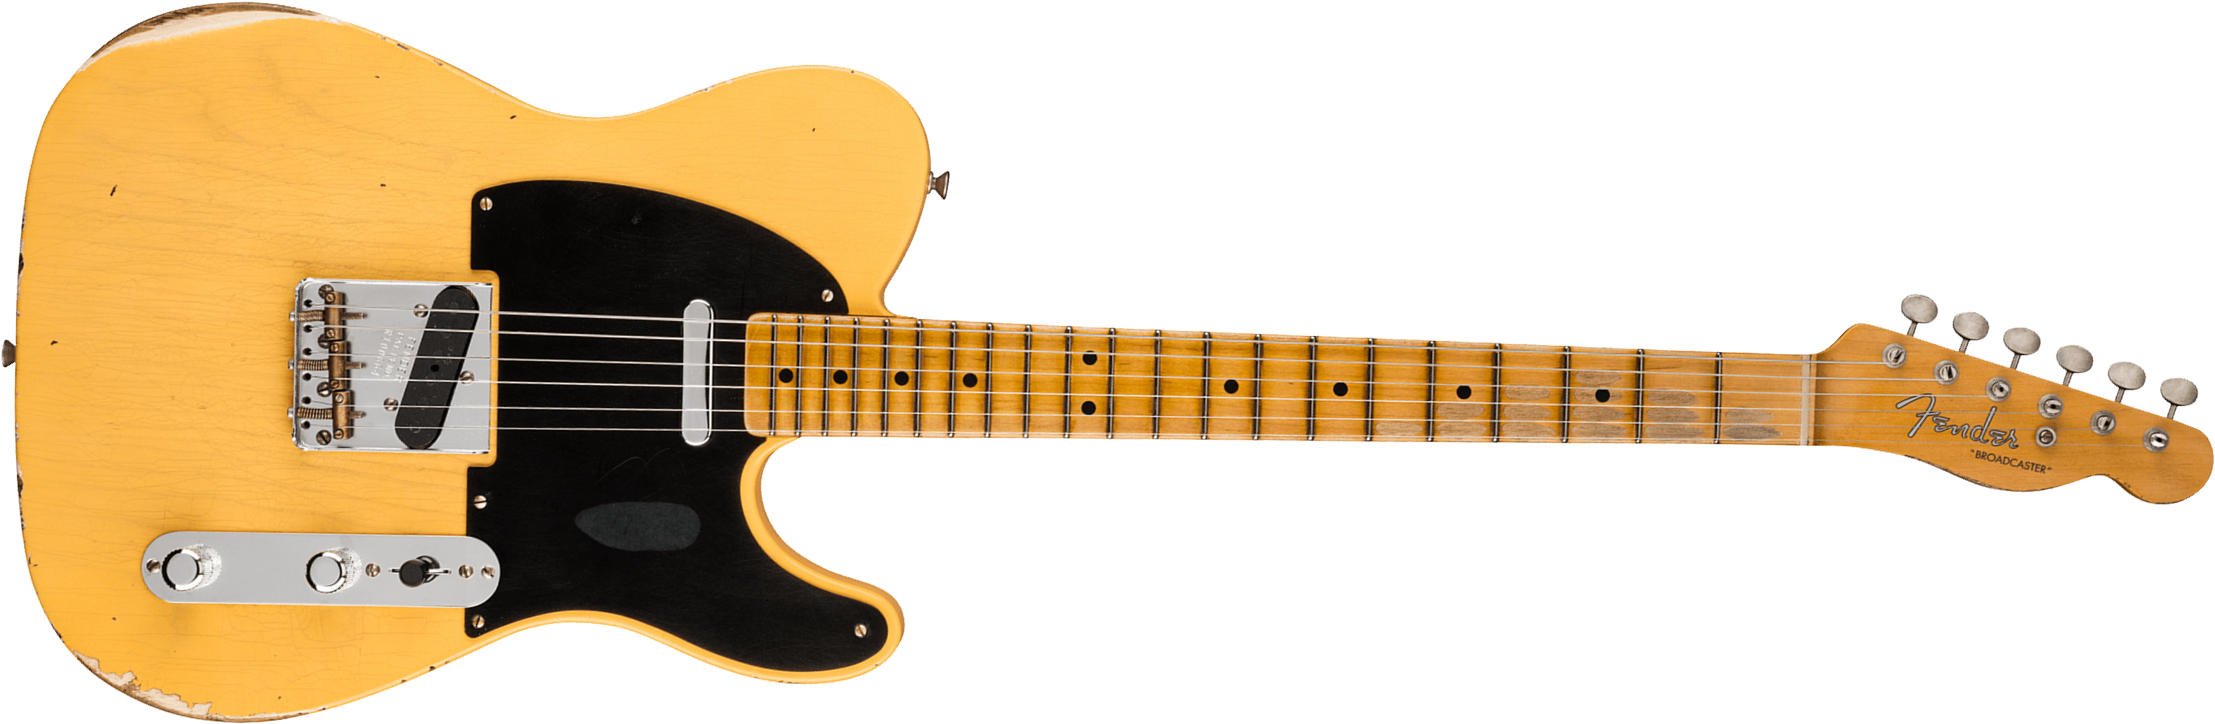 Fender Custom Shop Broadcaster Tele 70th Anniversary Ltd Mn - Relic Aged Nocaster Blonde - Televorm elektrische gitaar - Main picture